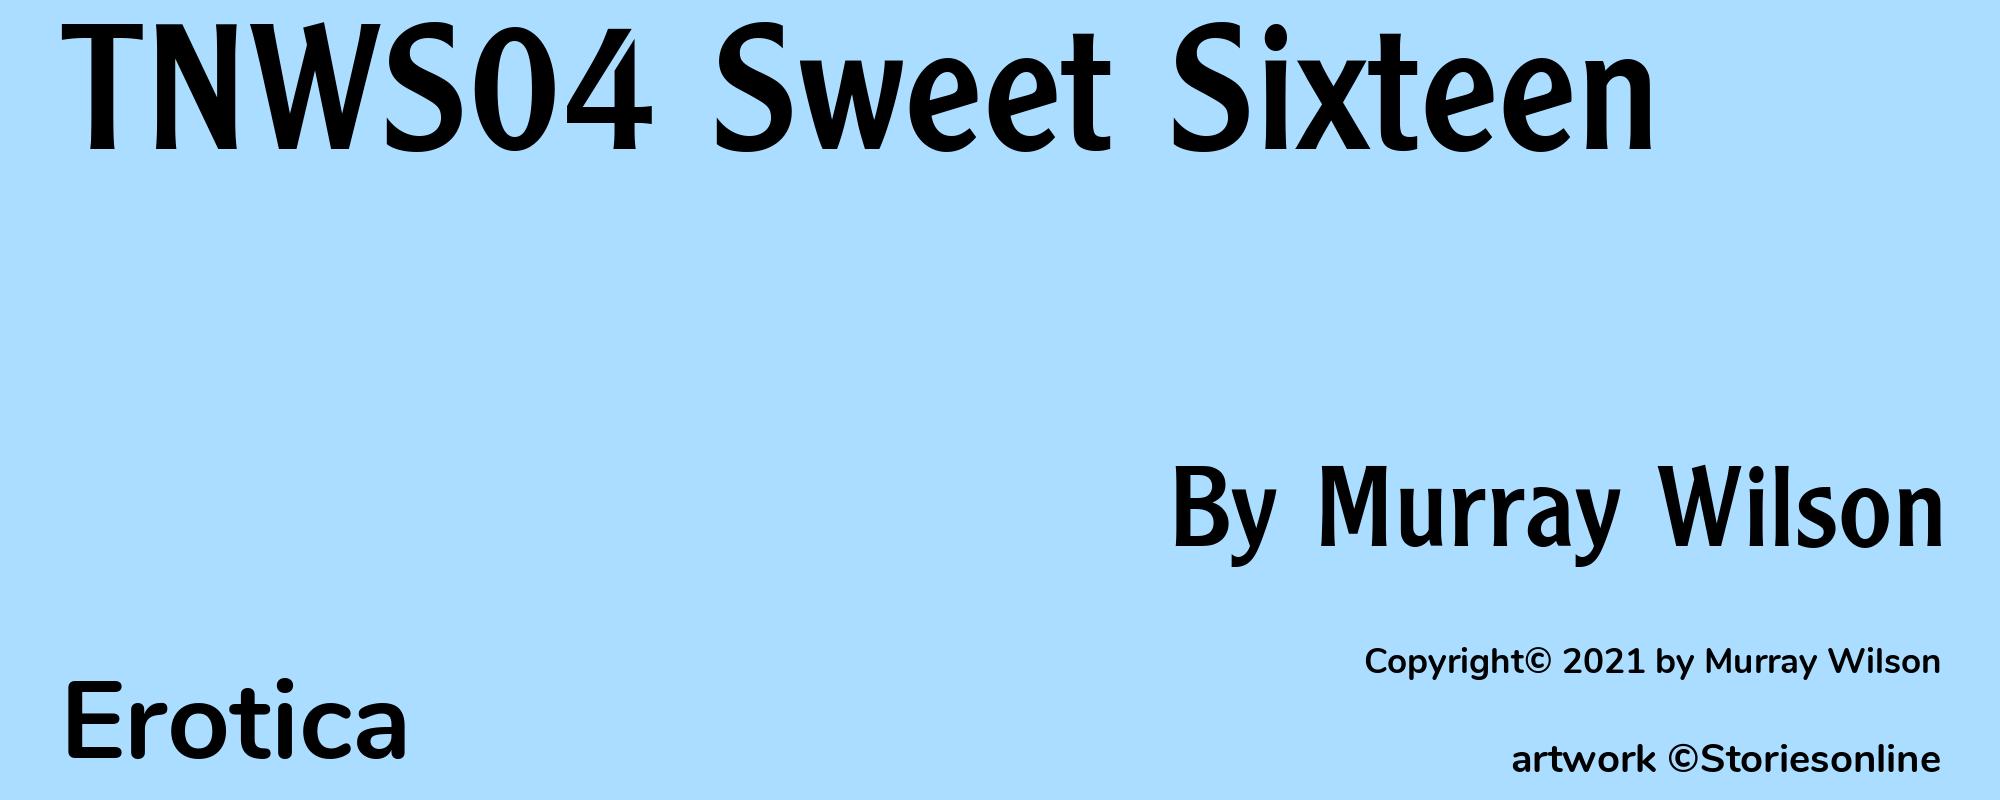 TNWS04 Sweet Sixteen - Cover